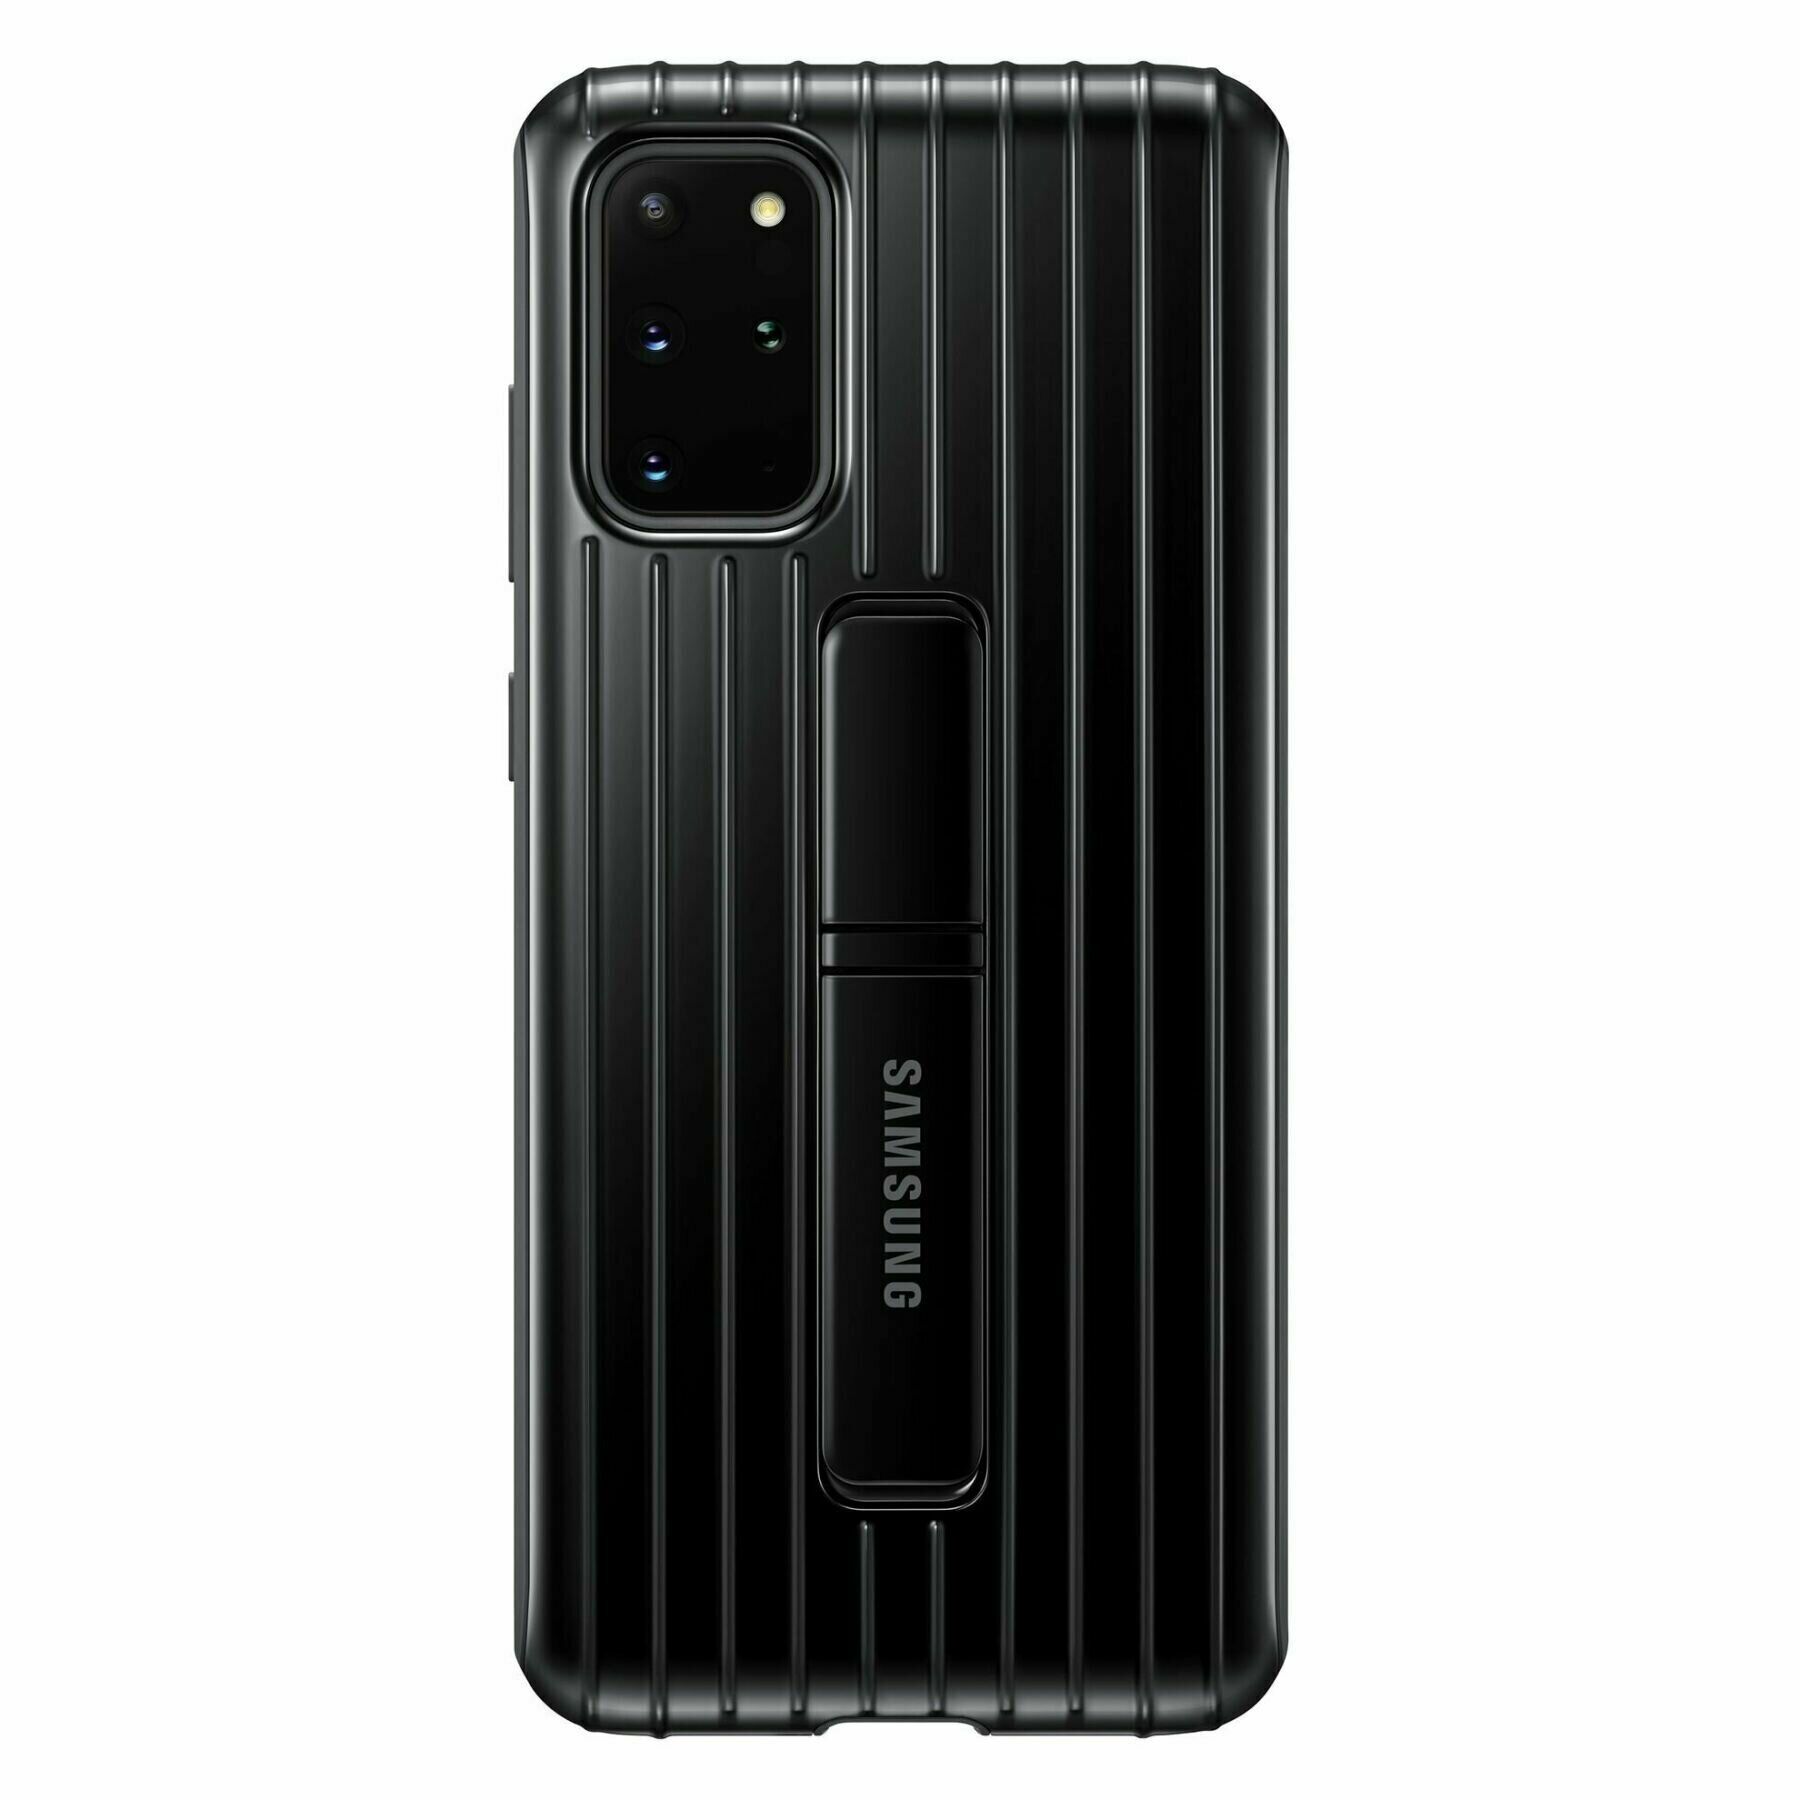 Акция на SAMSUNG для Galaxy S20+ (G985) Protective Standing Cover Black (EF-RG985CBEGRU) от Repka